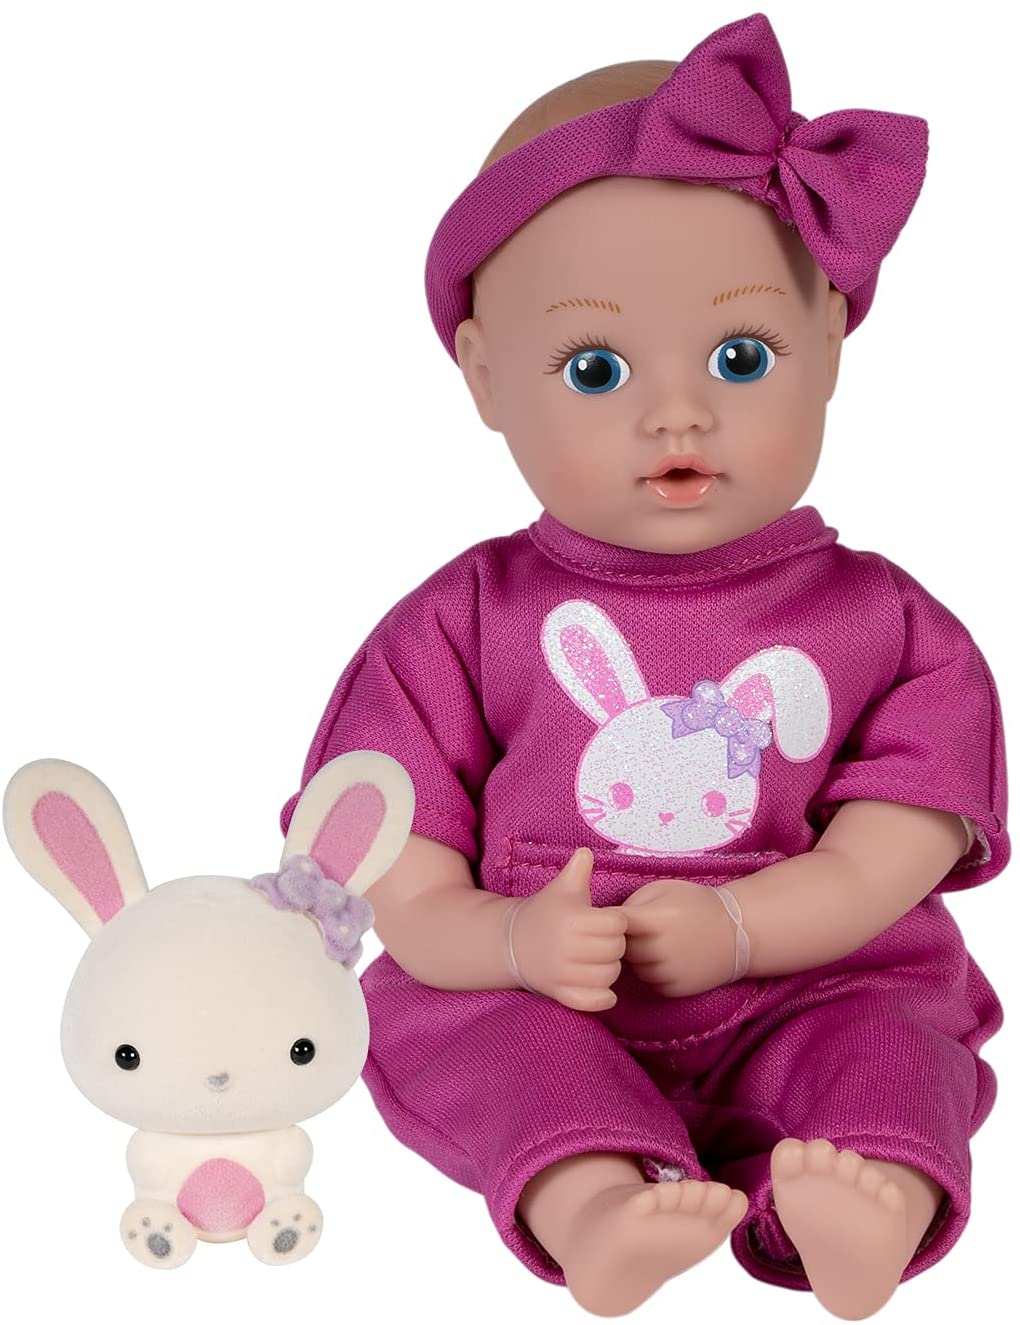 Adora Mini 8" Baby Doll with Soft Flocked Bunny Friend $13.52 - Free Ship w/Prime